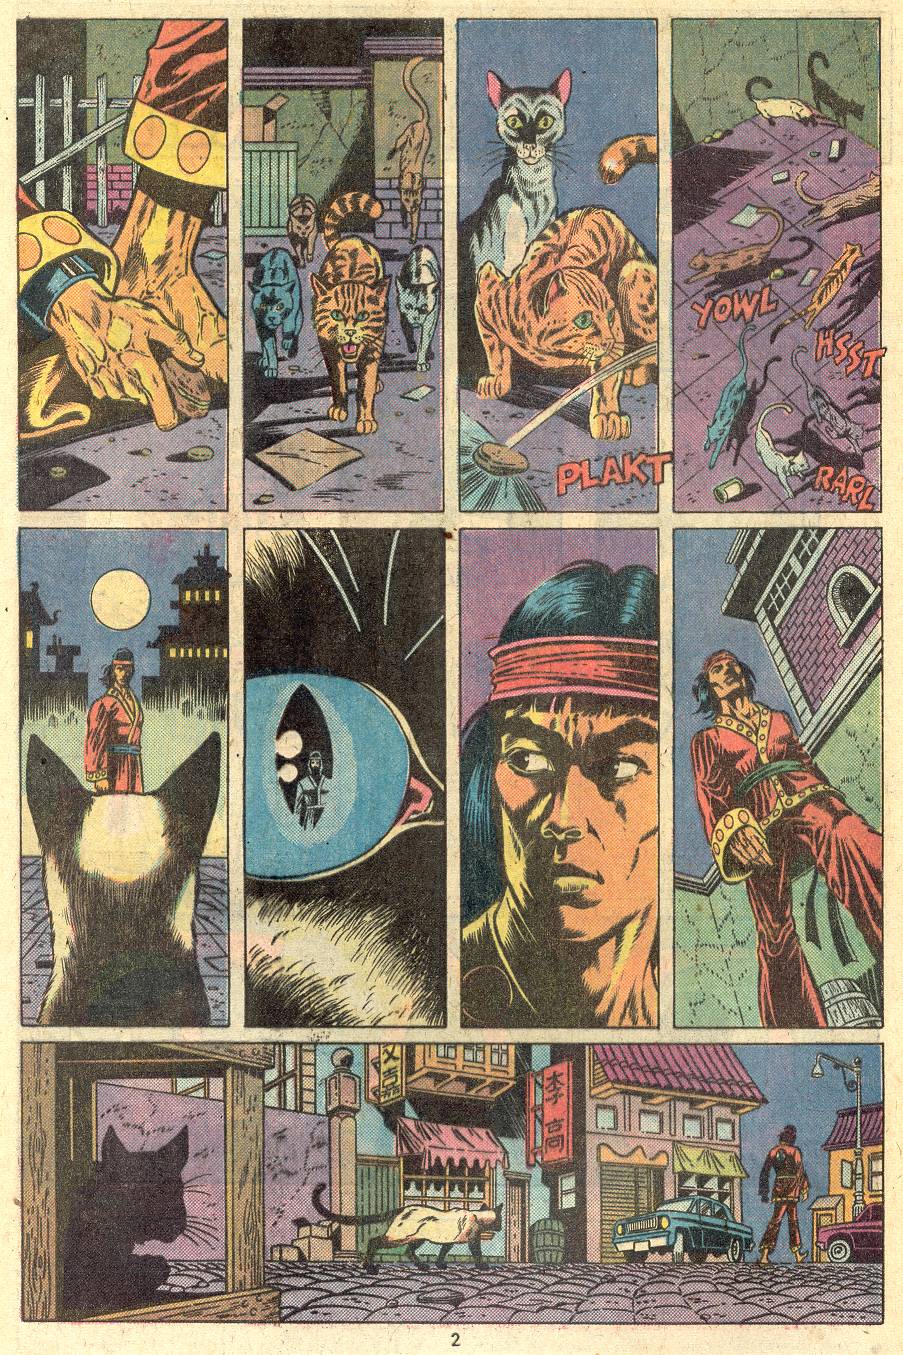 Master of Kung Fu (1974) Issue #38 #23 - English 3